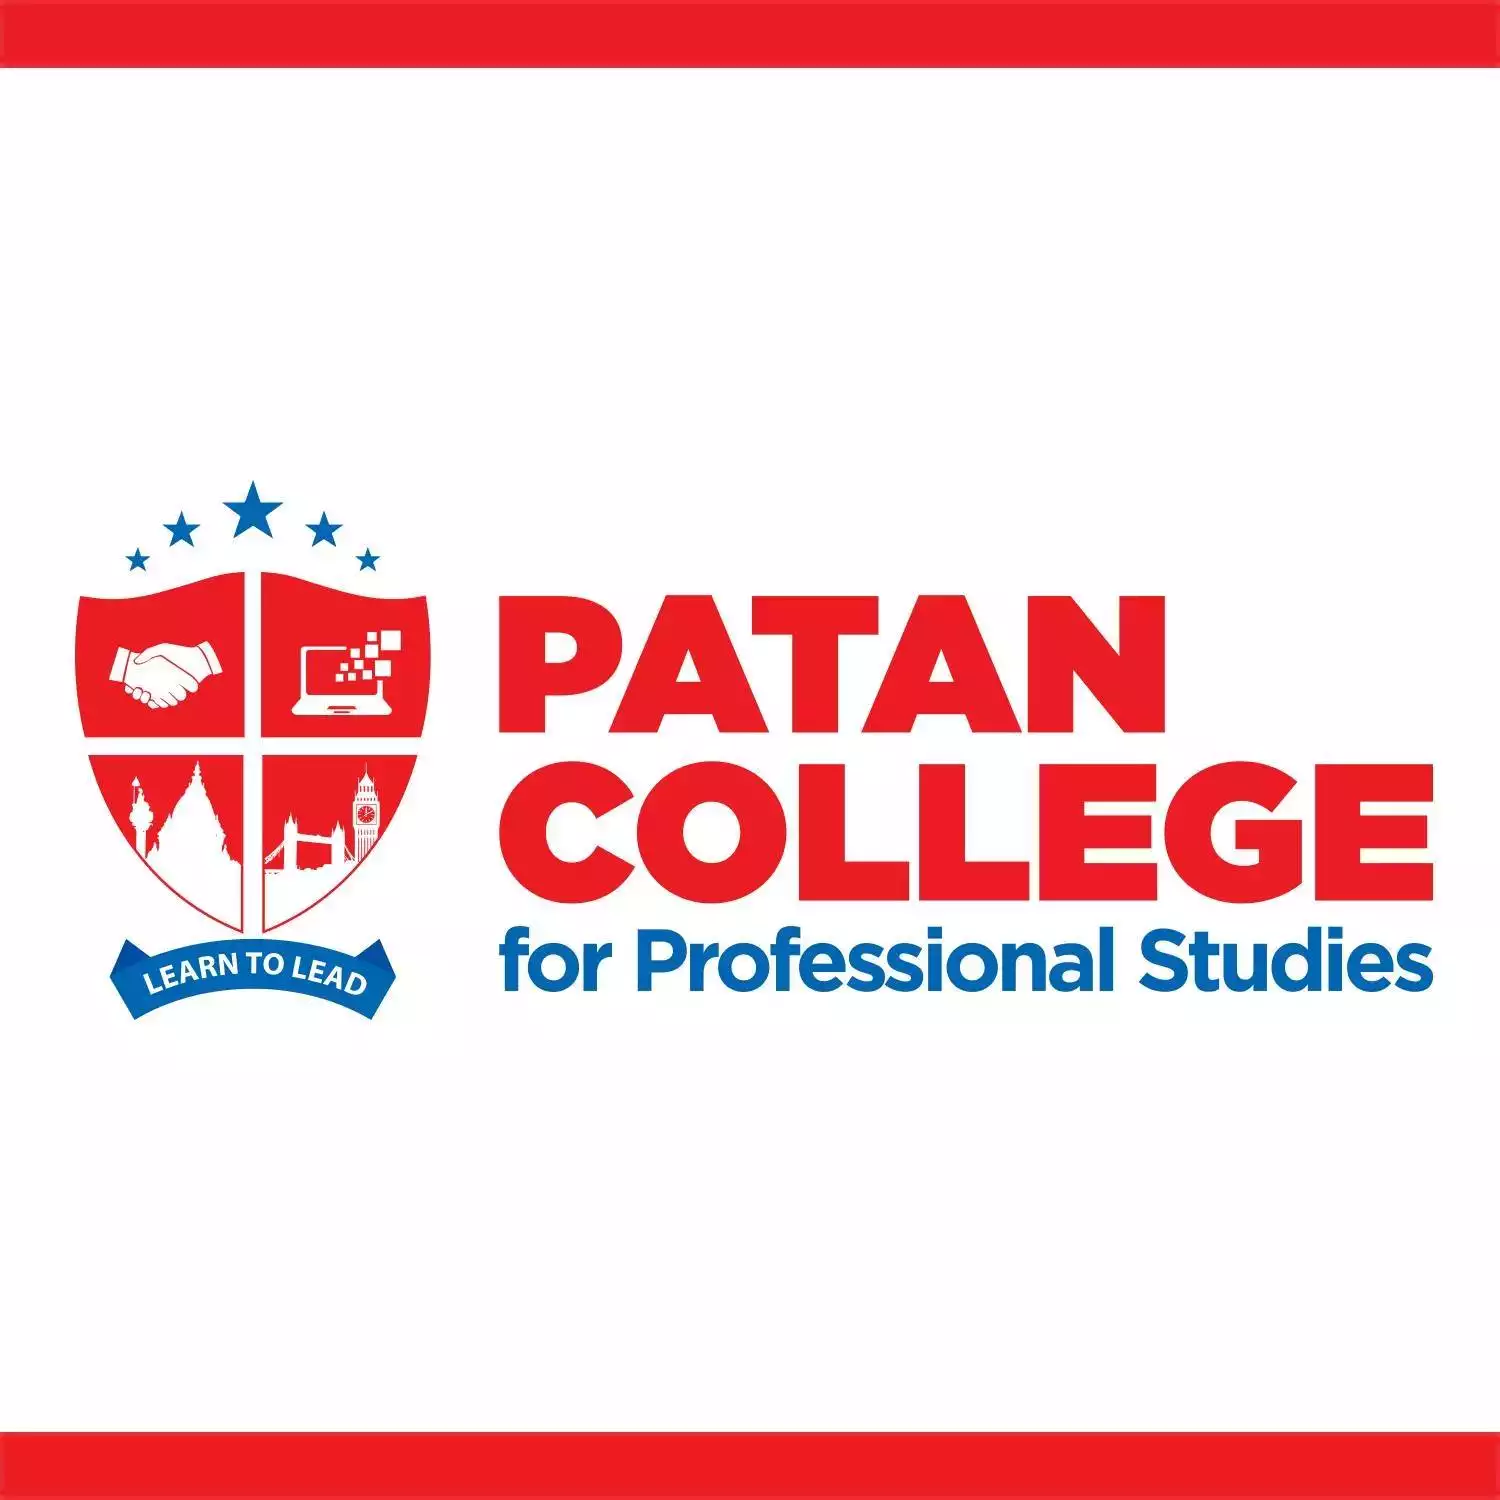 Patan College for Professional Studies Scholarship programs